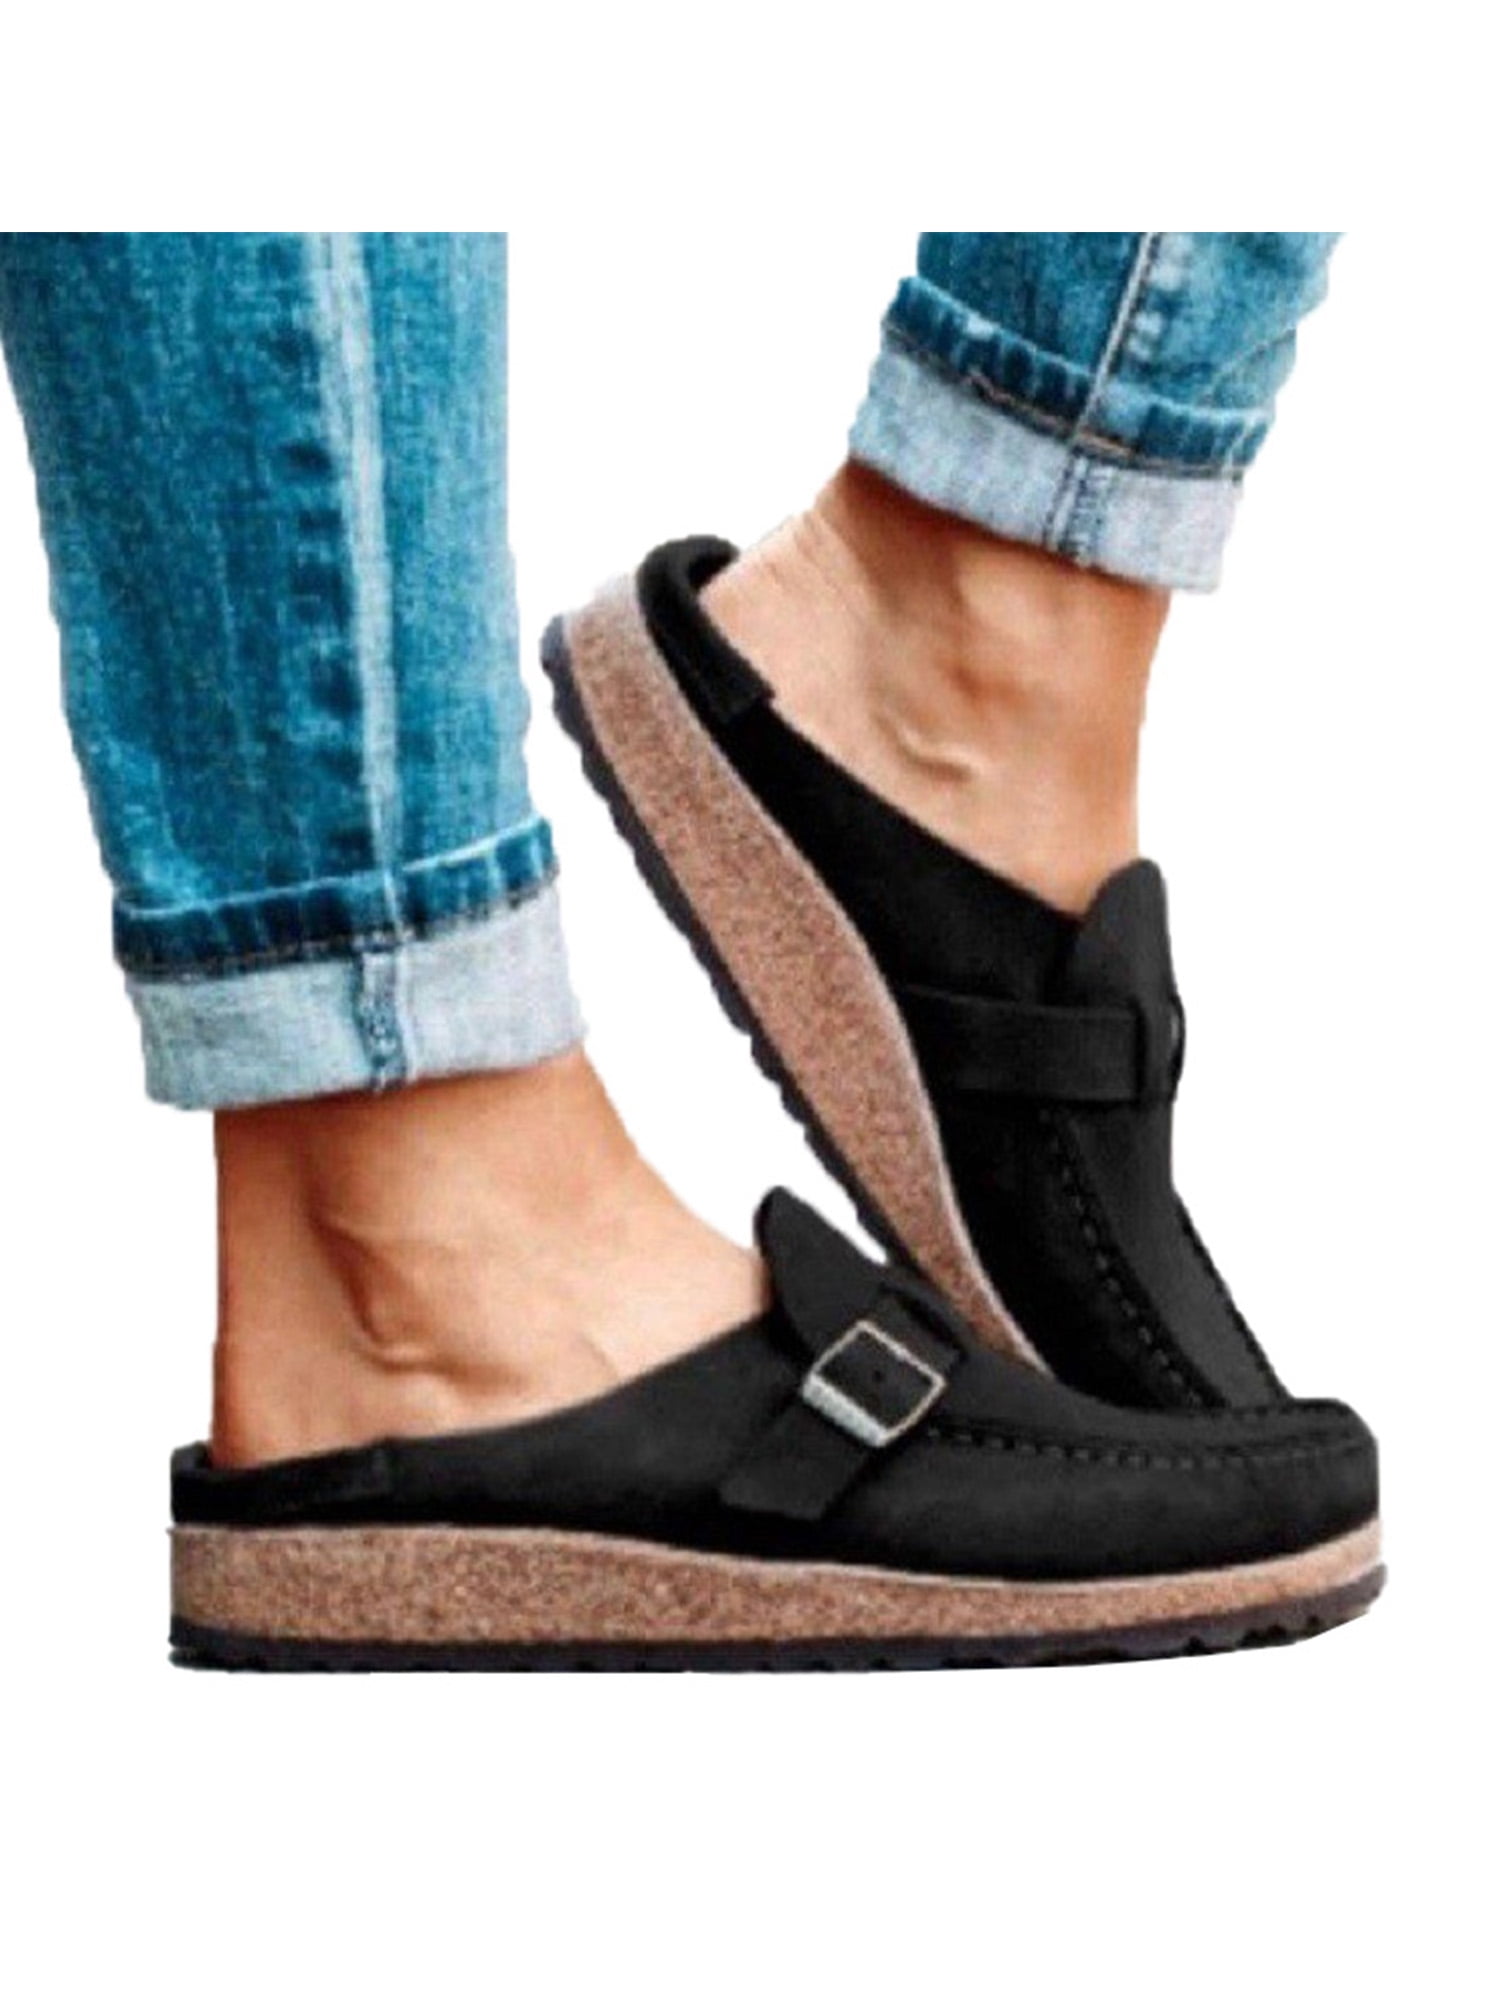 Daeful Garden Clogs Wide Width Sandals Women's Comfortable Flat Slip On  Mules & Slides Slide Sandals 